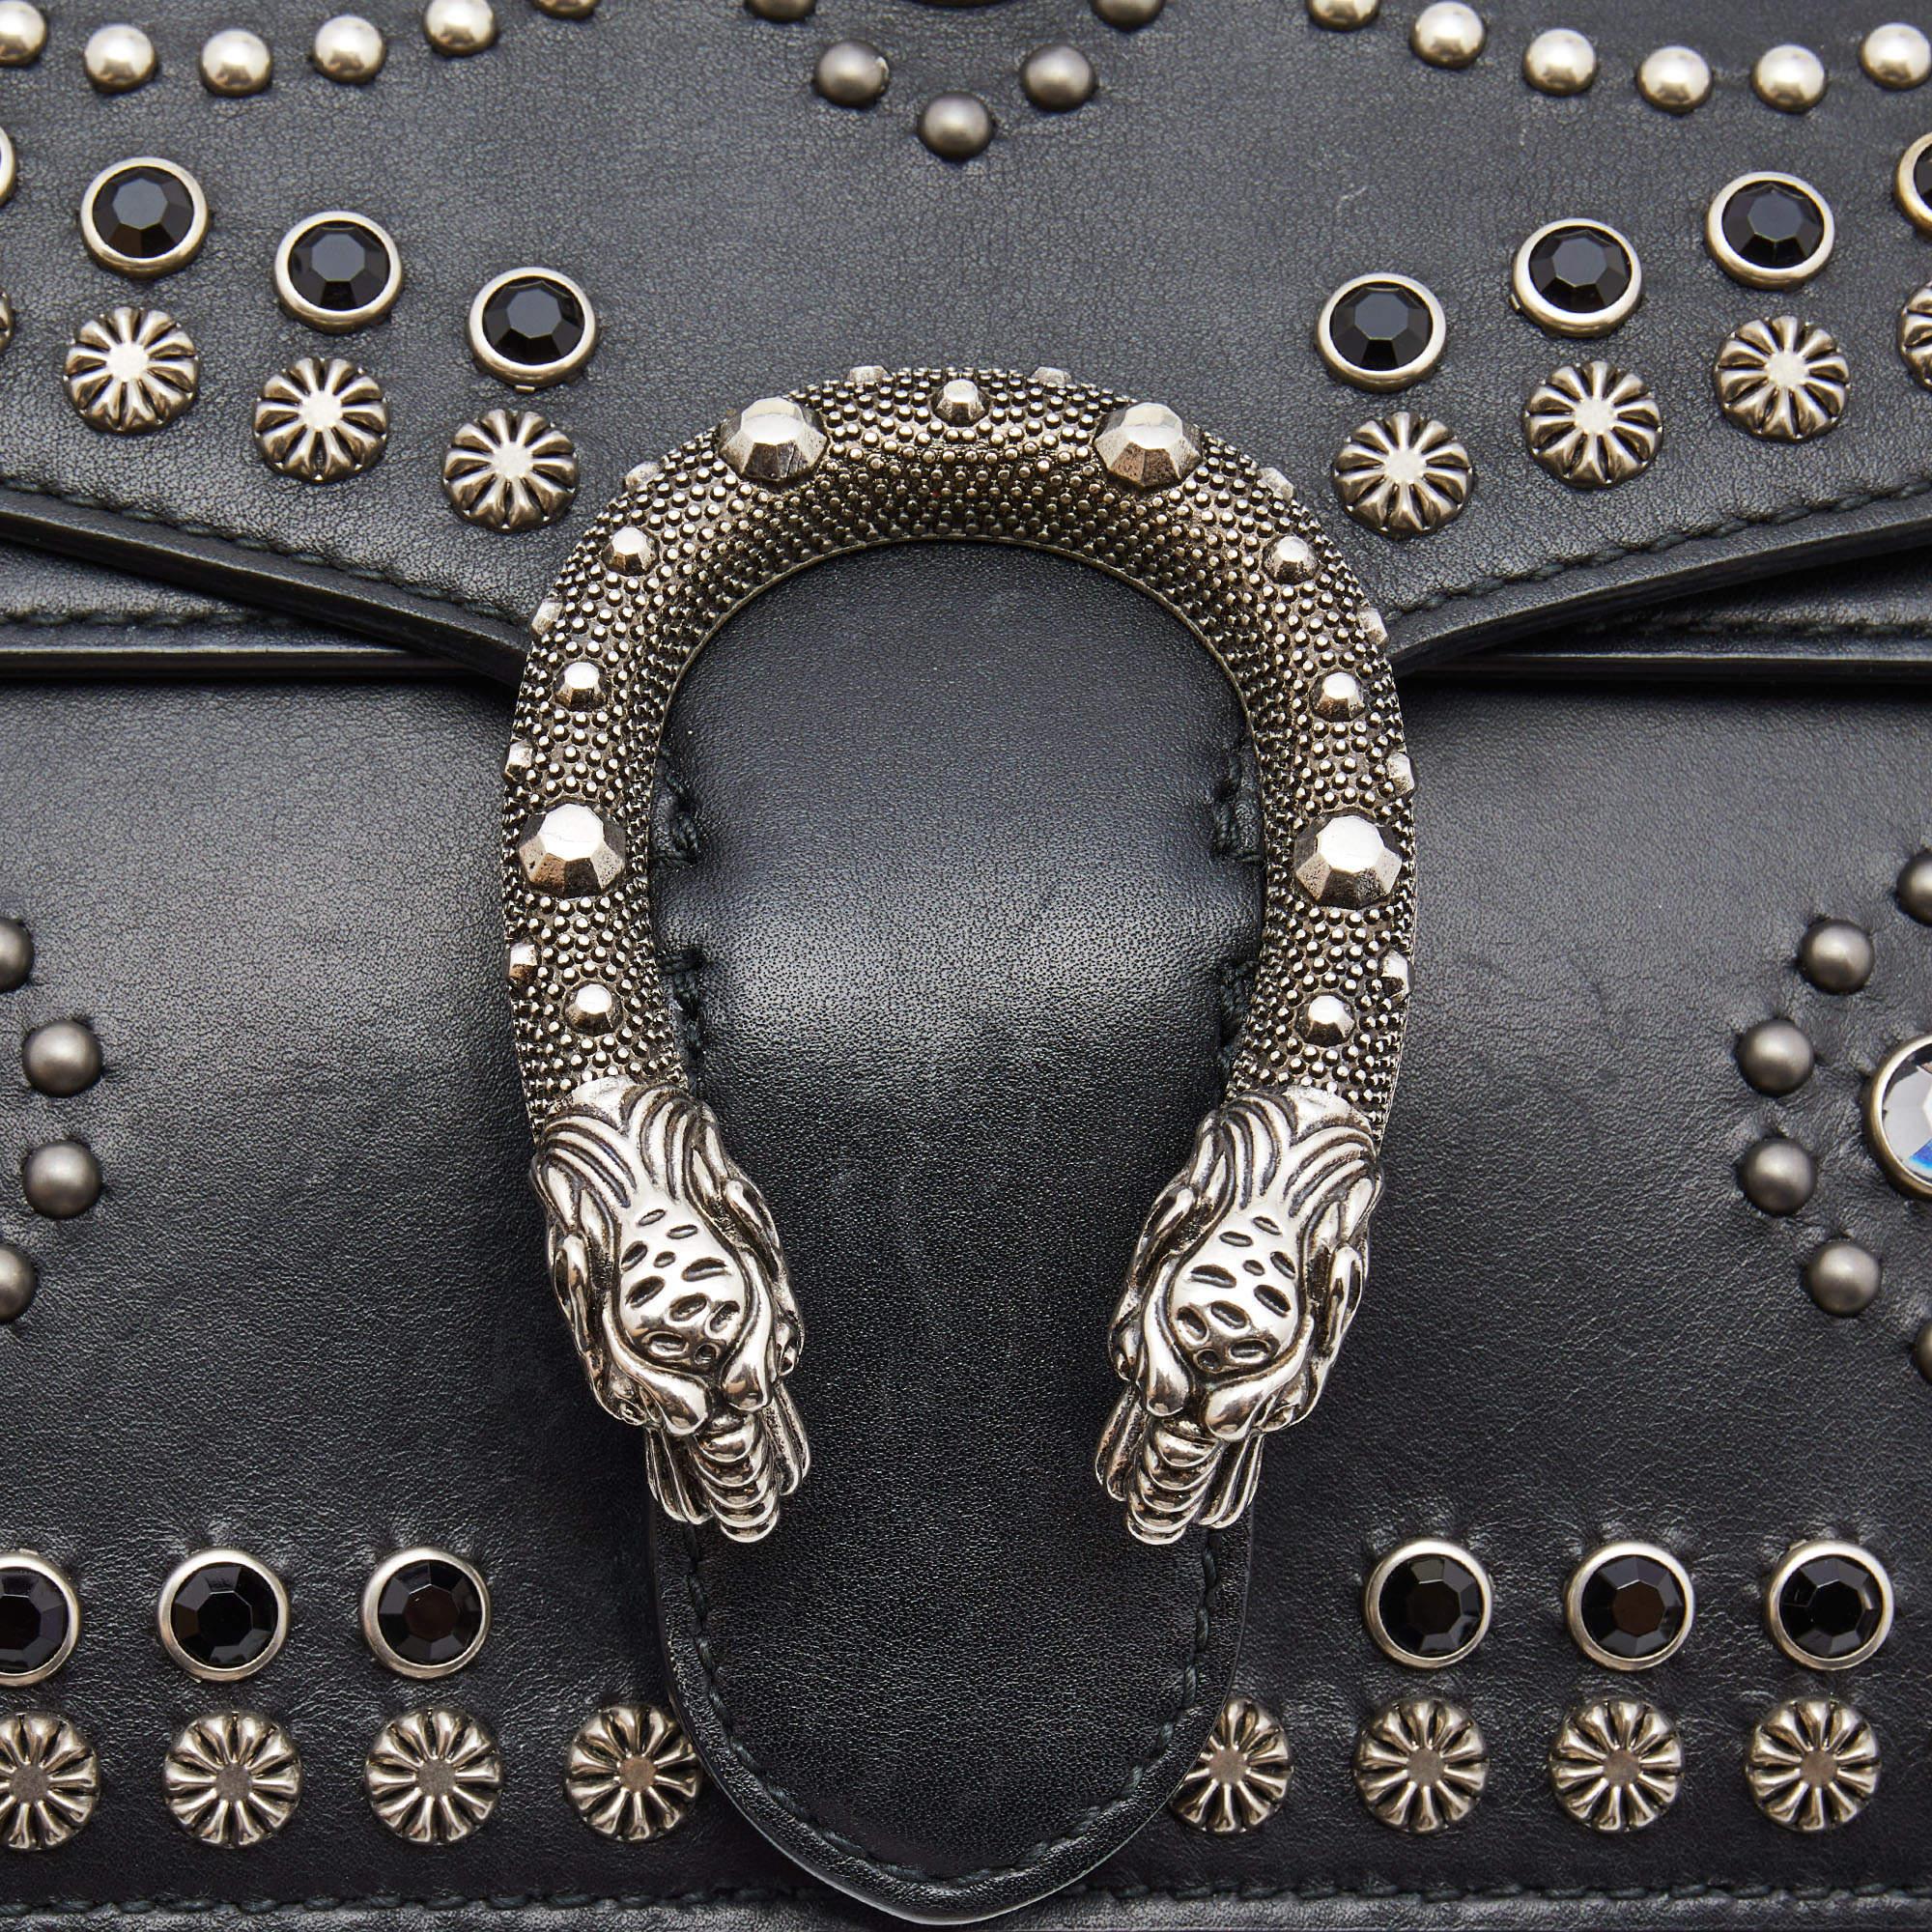 Gucci Black Leather Small Strass Studded Dionysus Shoulder Bag 11